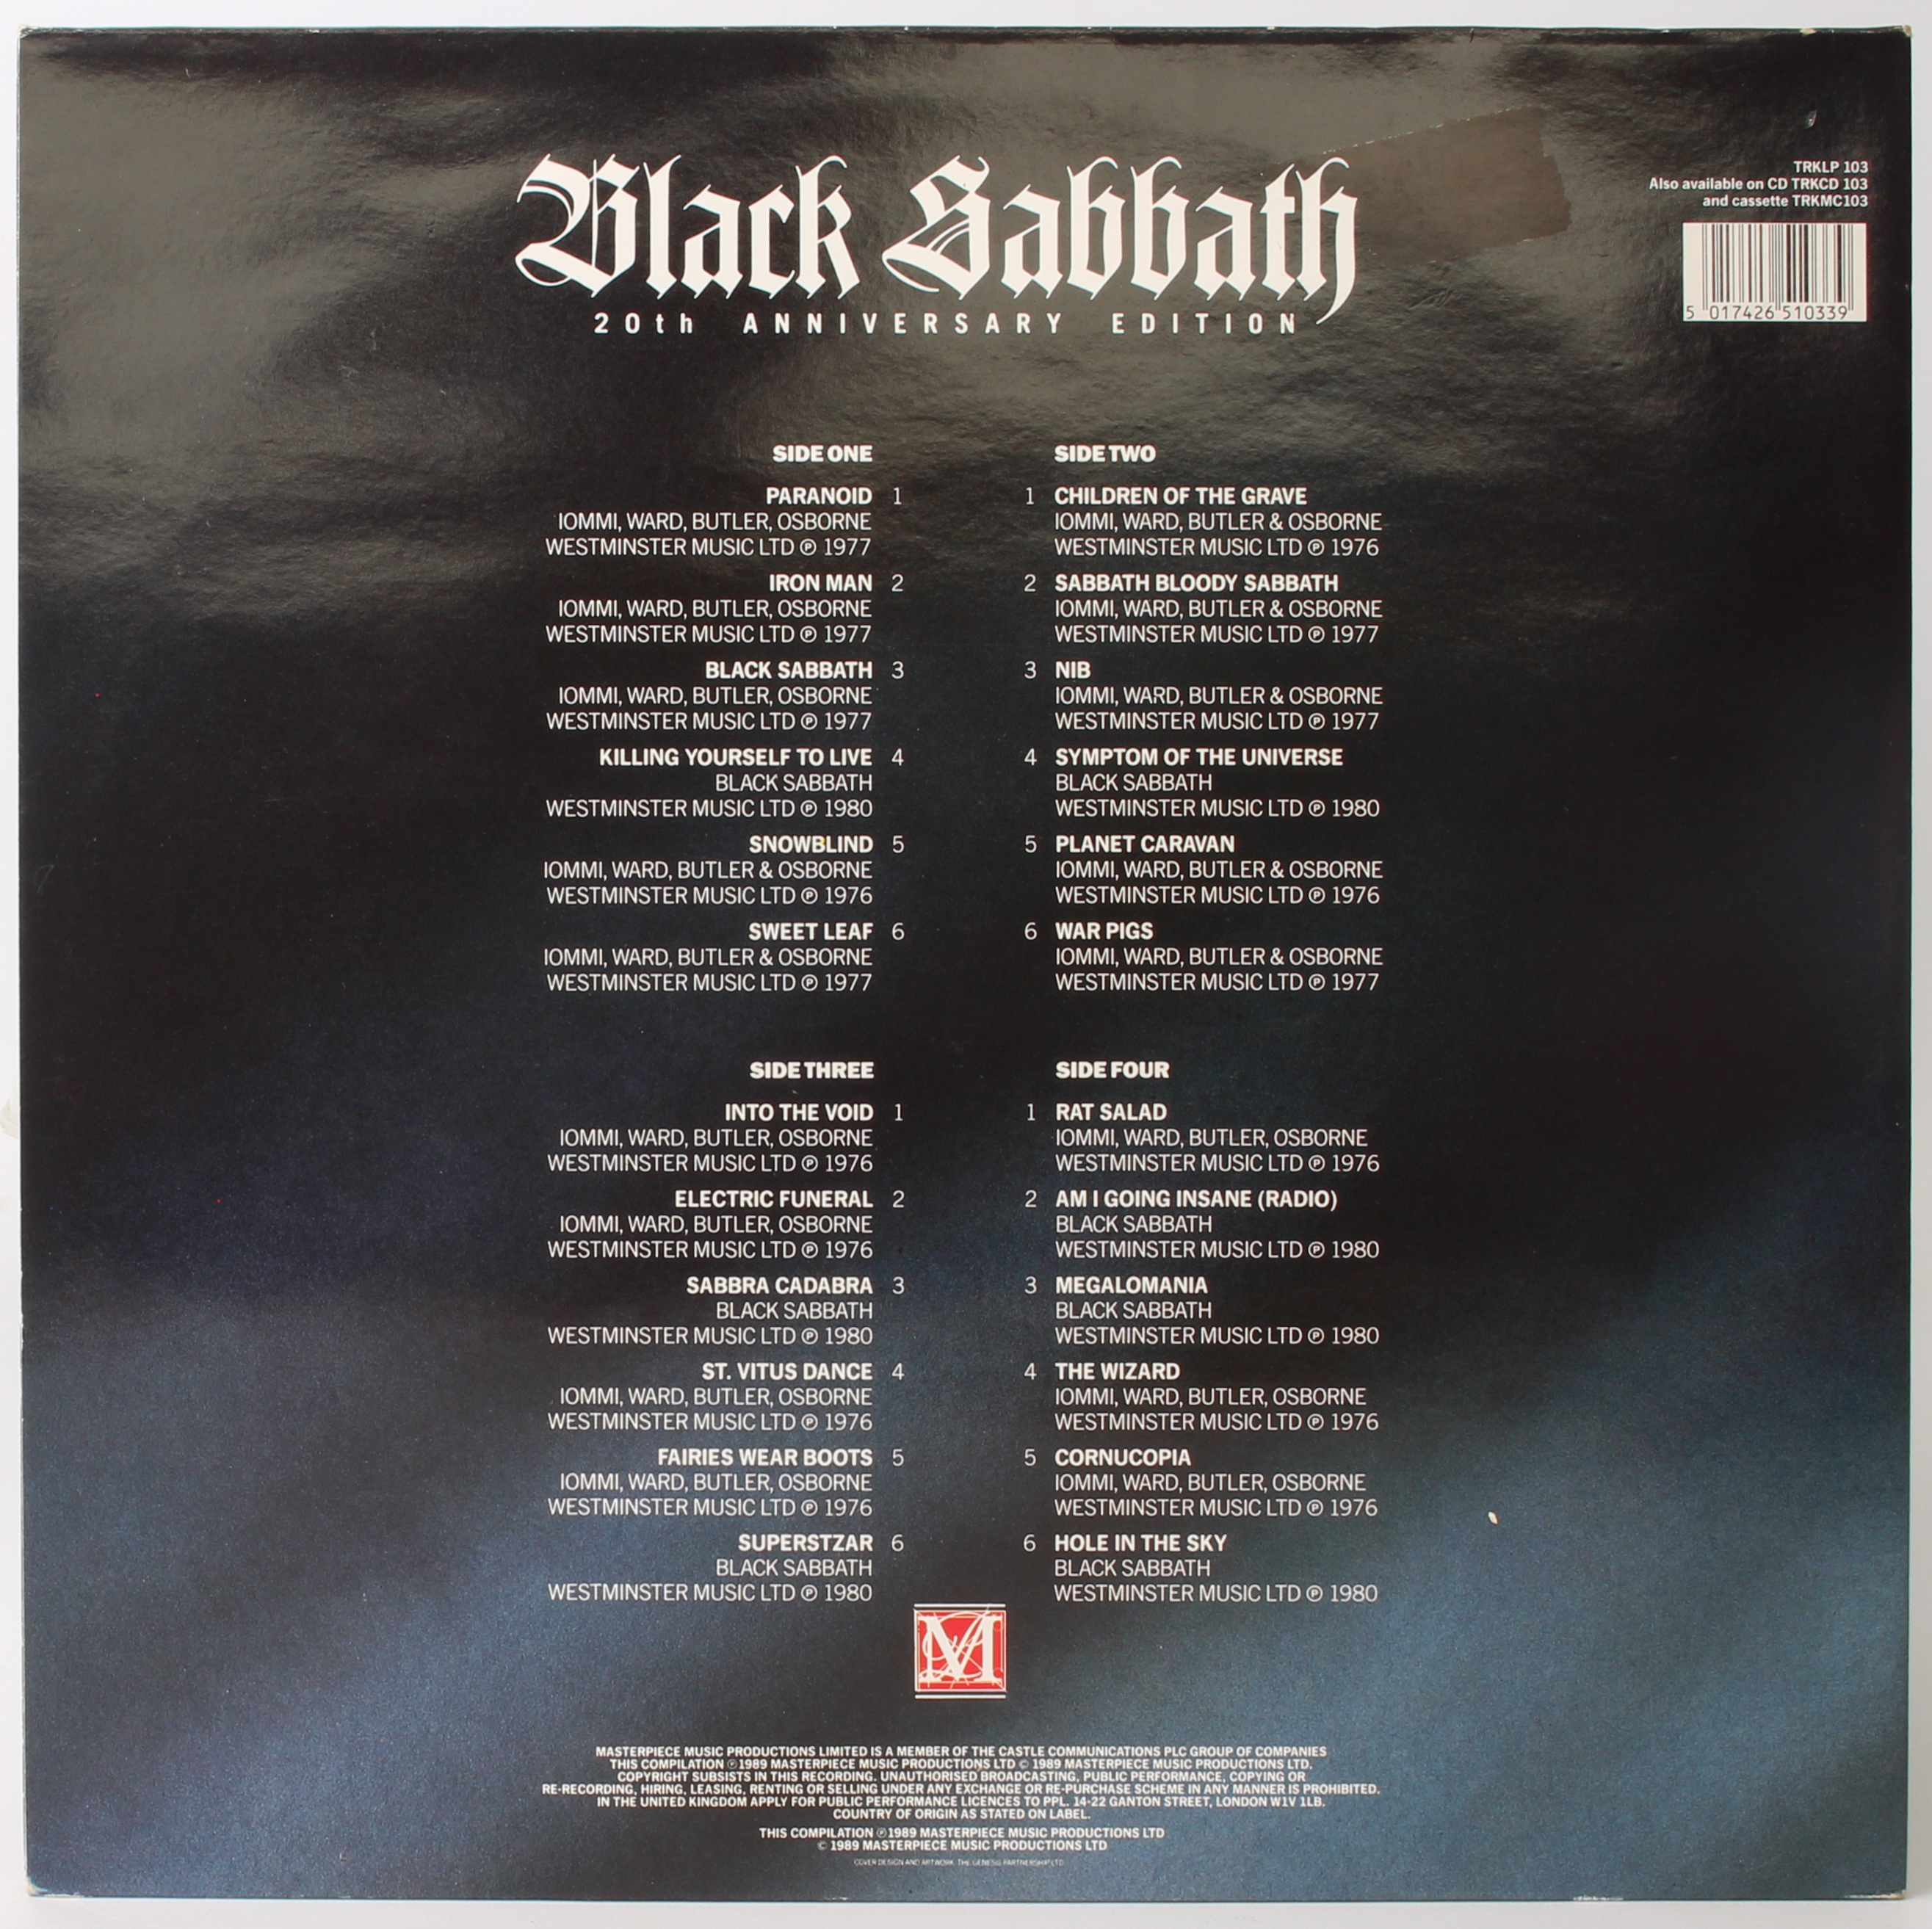 6 albums by Black Sabbath and Ozzy Osbourne to include: Black Sabbath (Nems Records); Vol 4 (Nems - Image 8 of 8